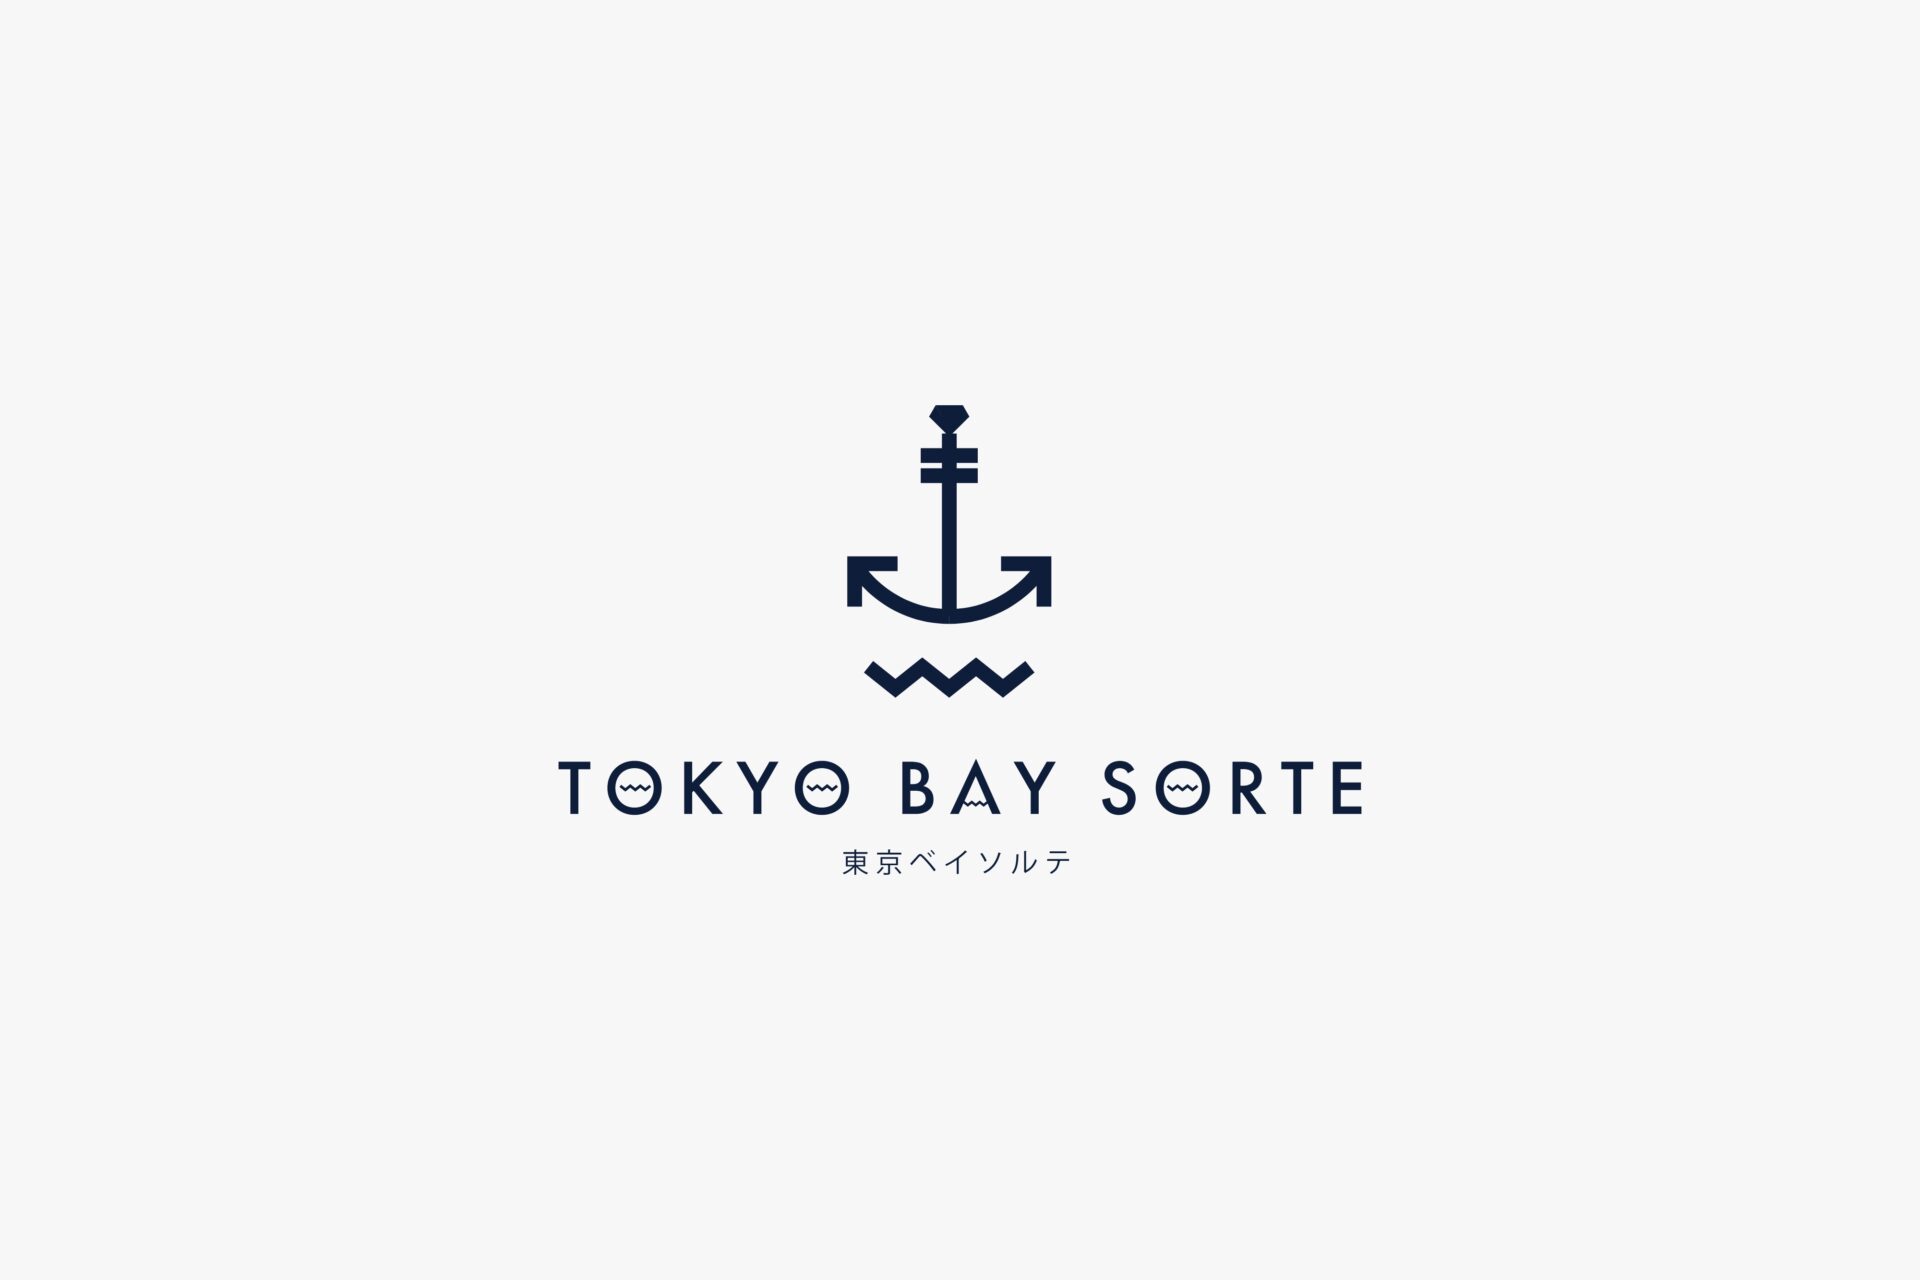 TOKYO BAY SORTE